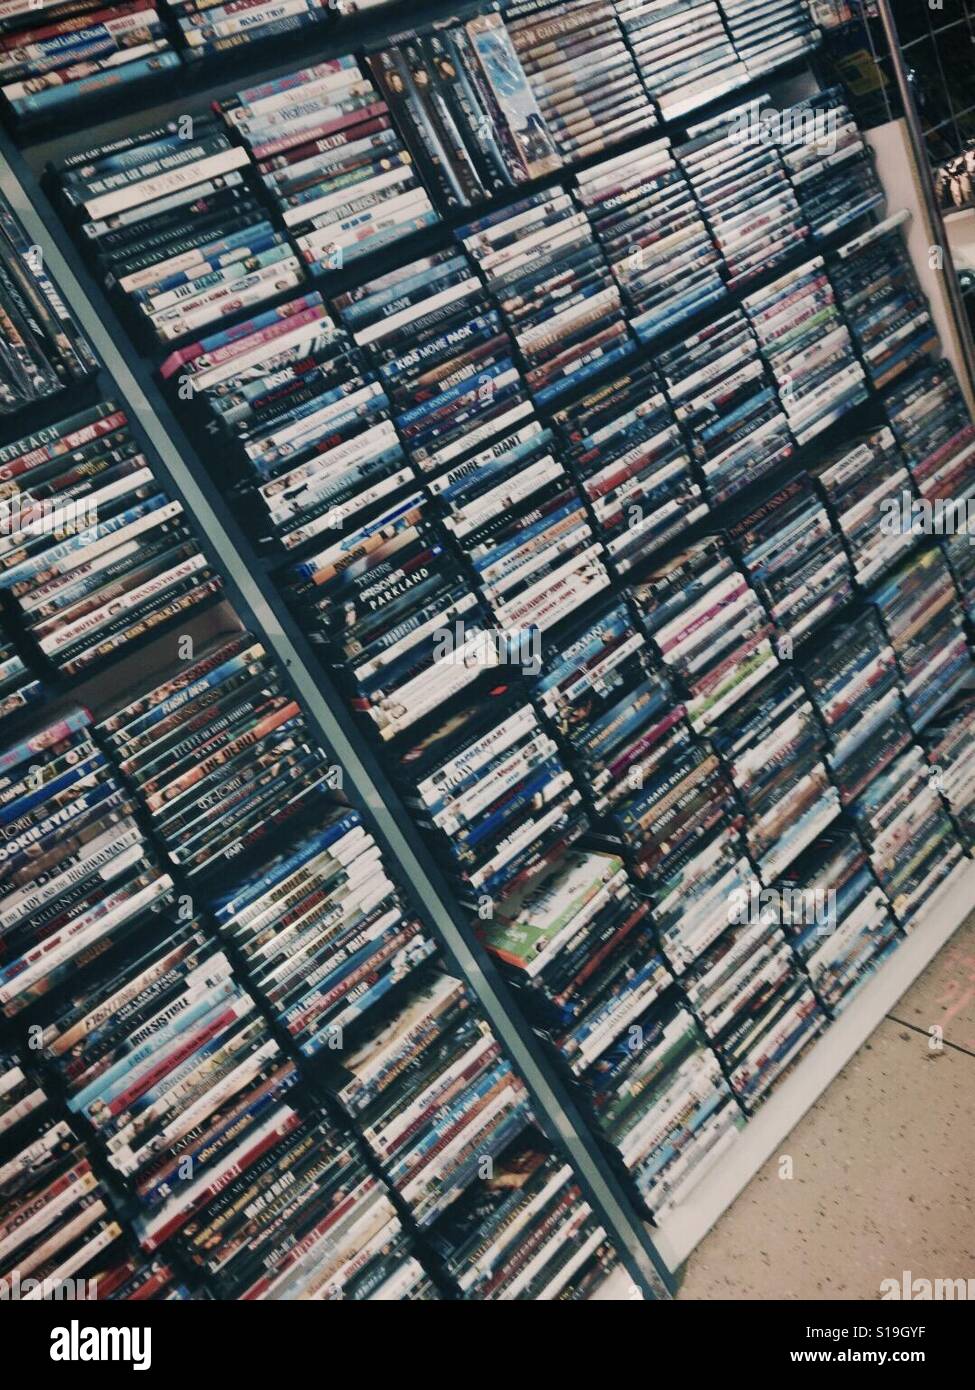 Stacks of Movie DVDs on Shelves Stock Photo